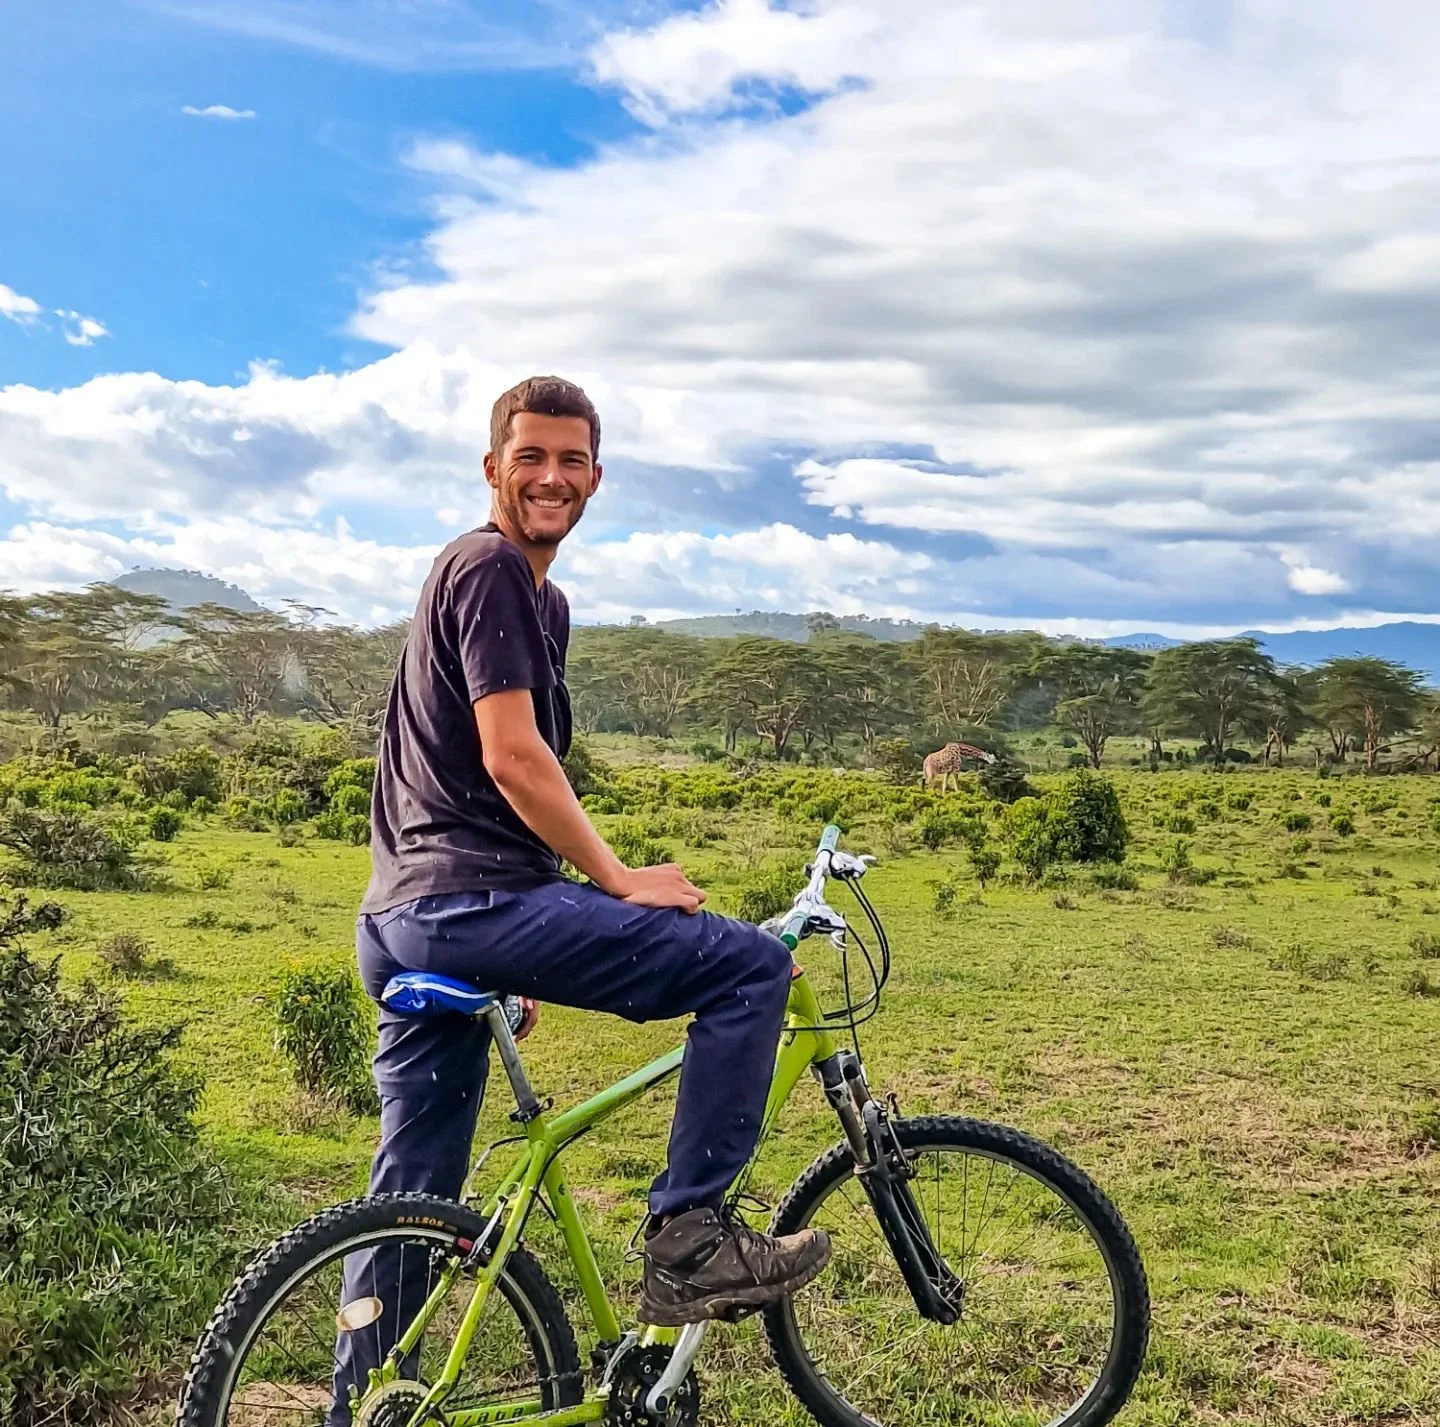 Pol on his bike, spotting a giraffe, in Lake Naivasha, Kenya